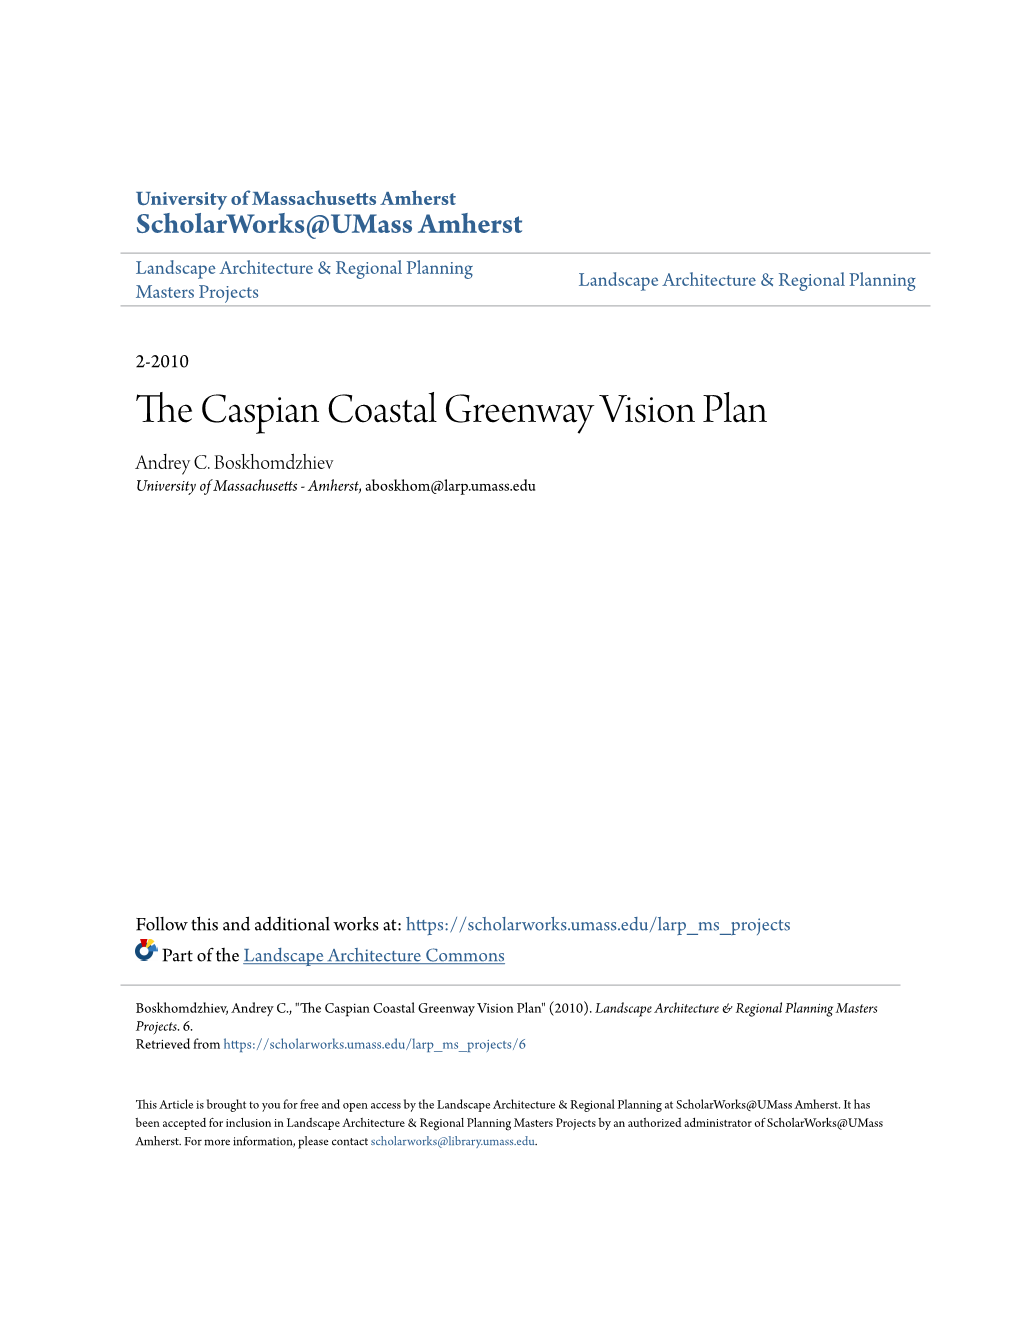 The Caspian Coastal Greenway Vision Plan Master’S Project